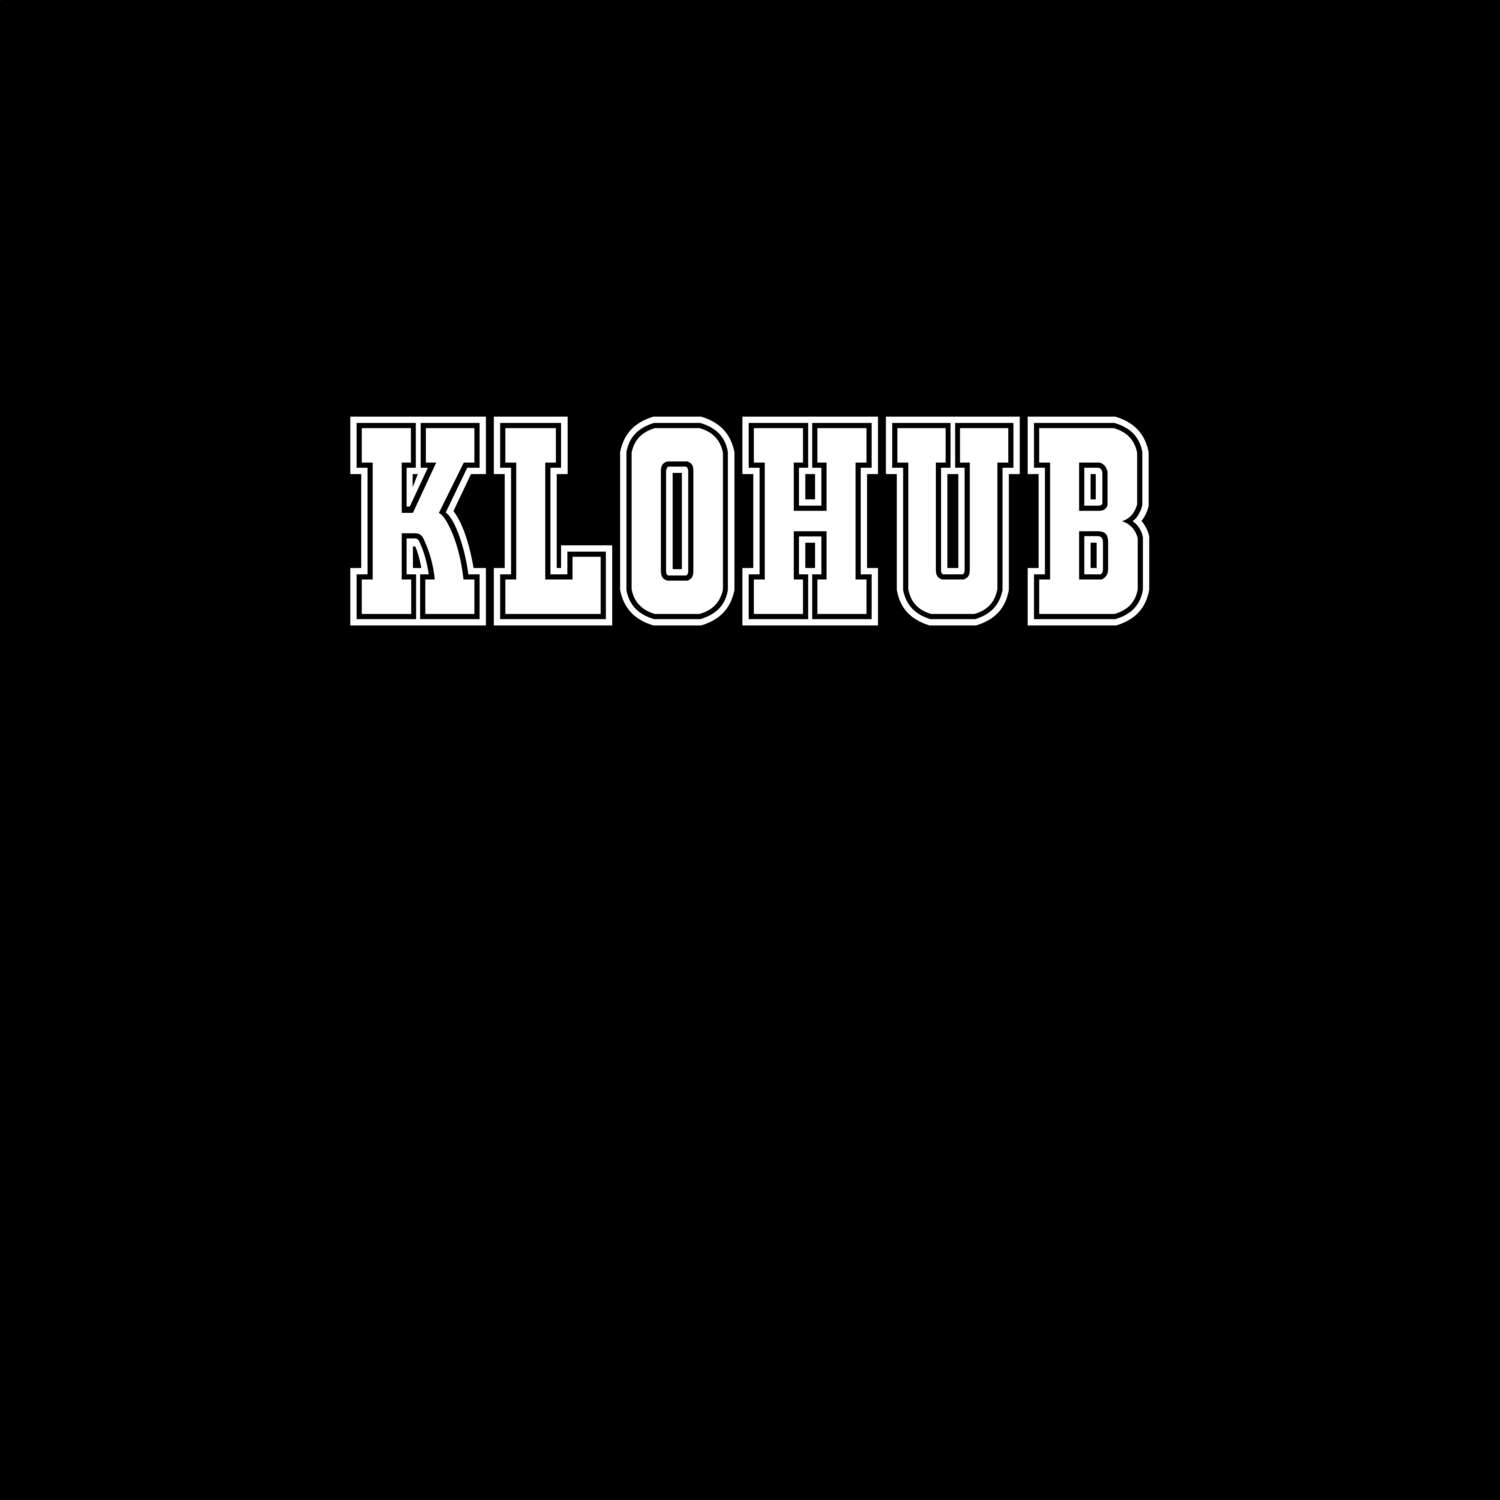 Klohub T-Shirt »Classic«